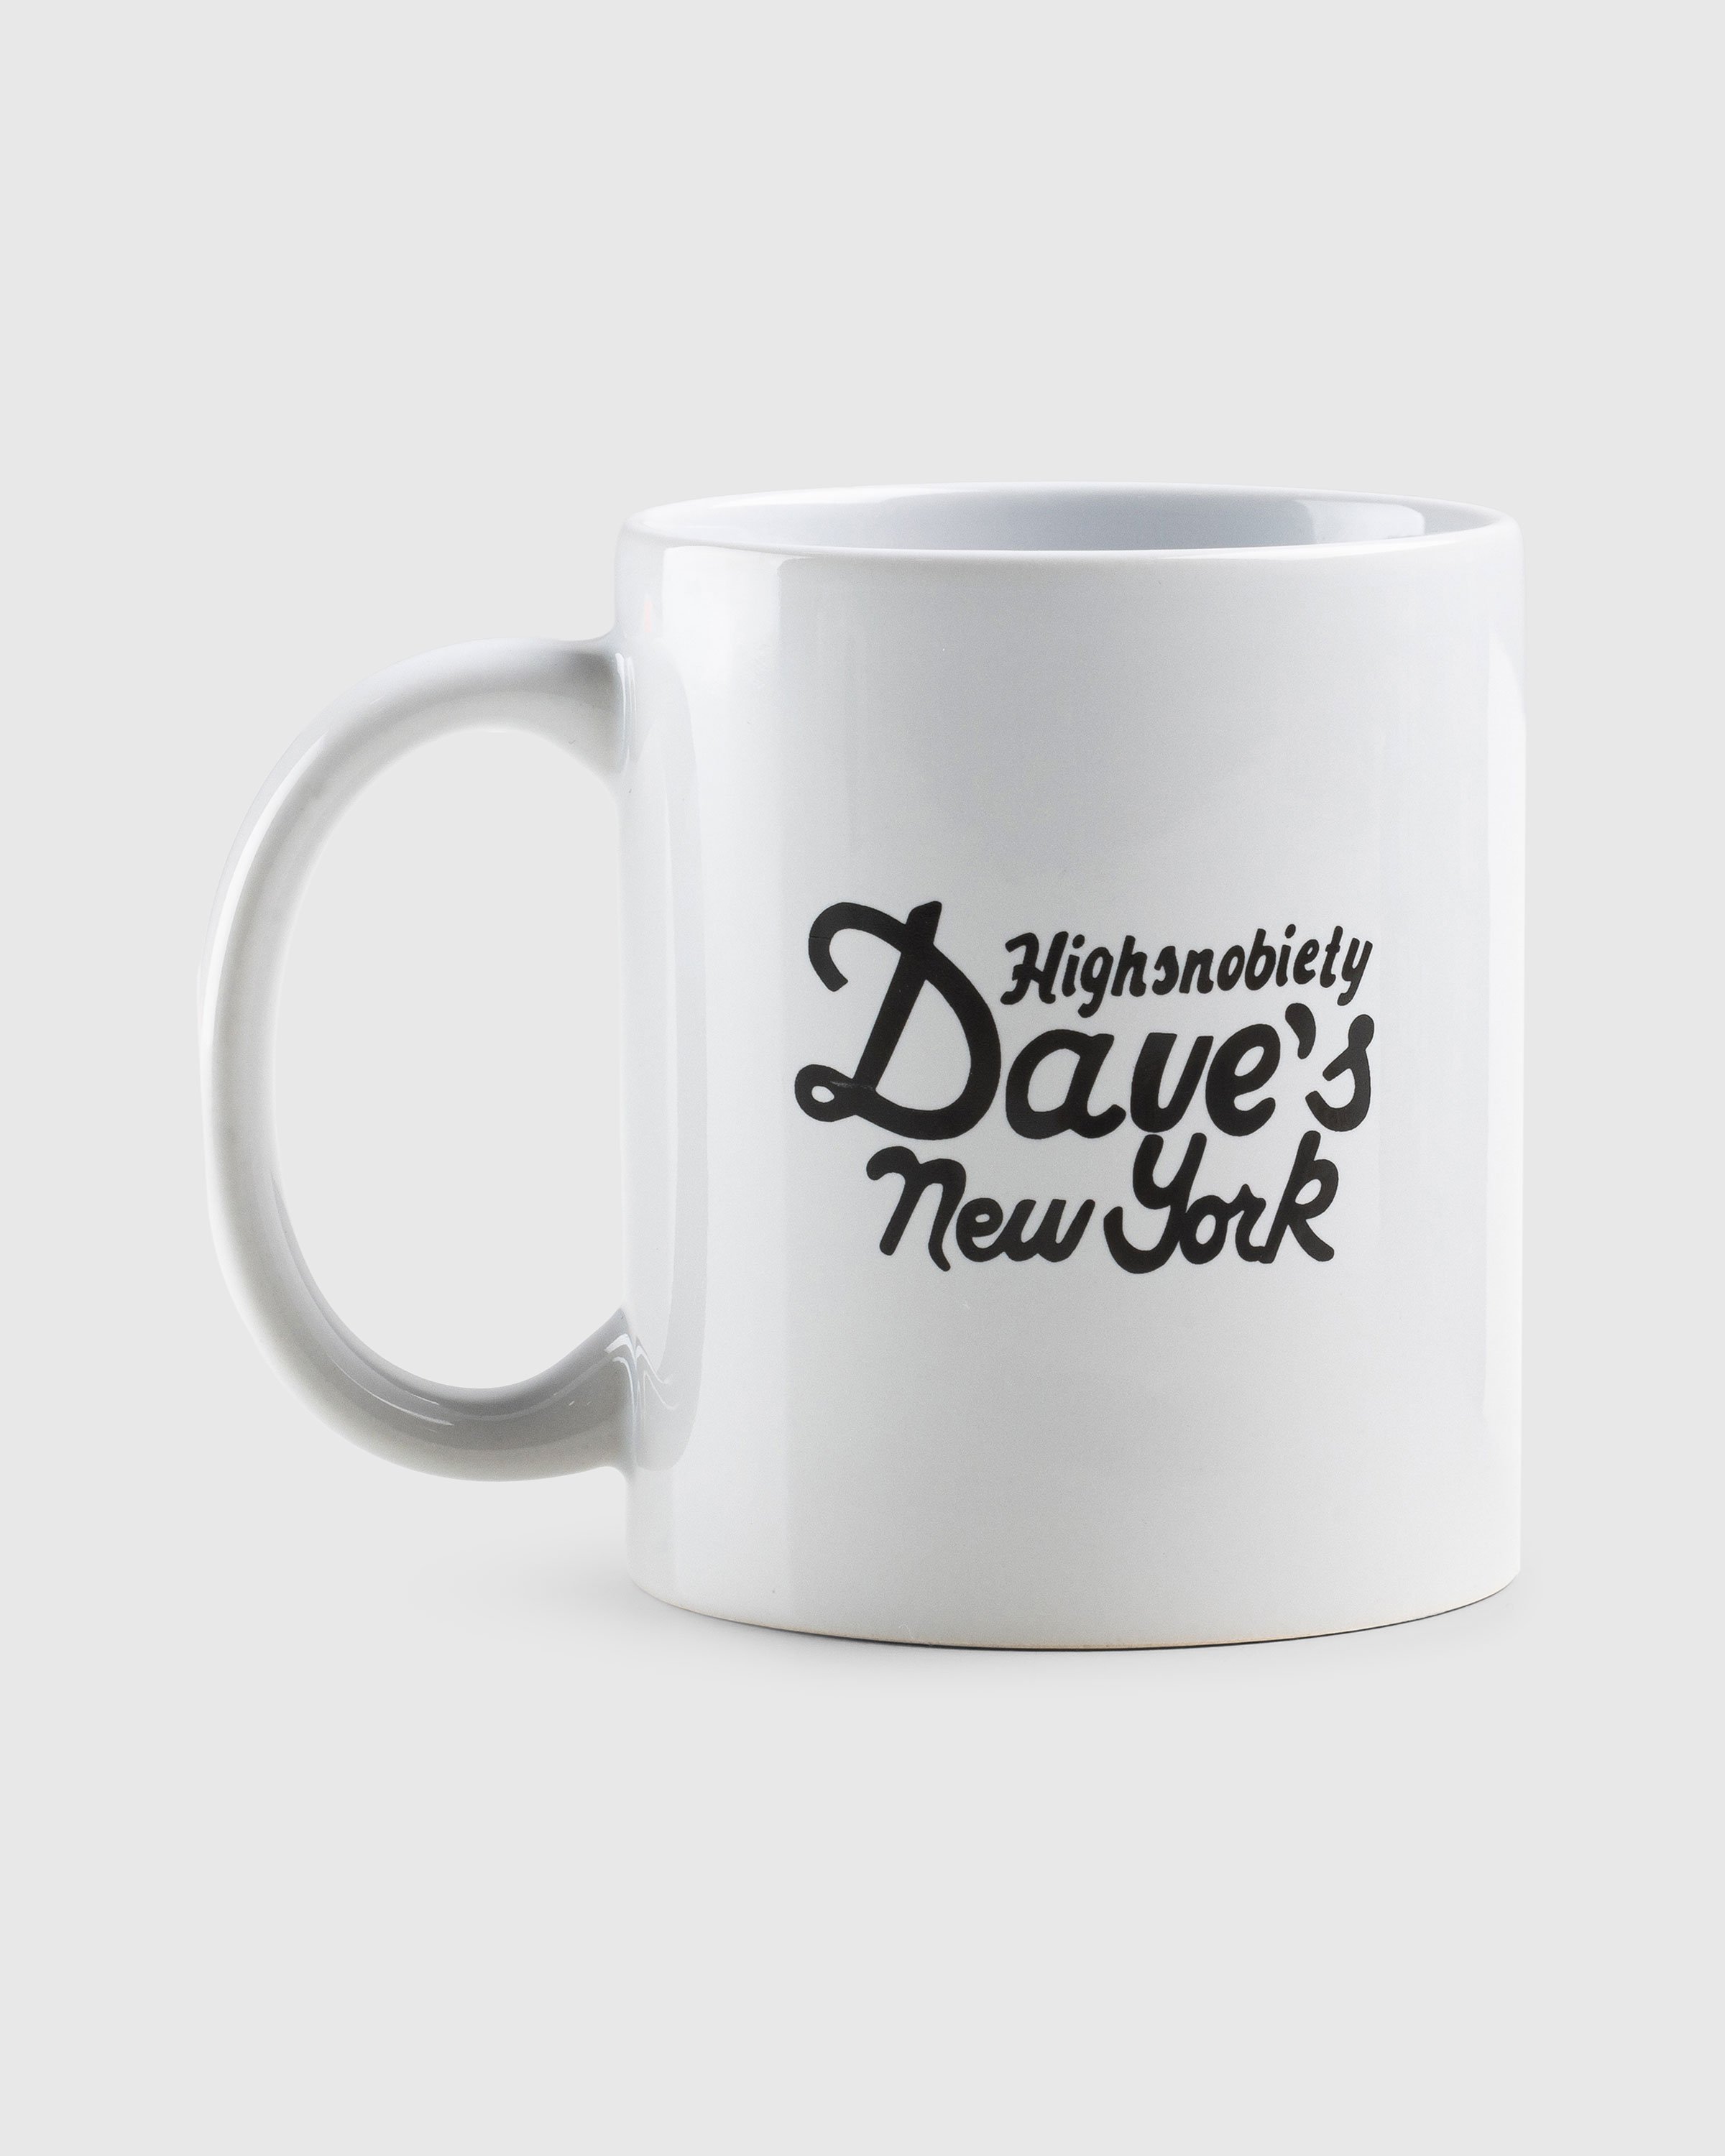 Dave's New York x Highsnobiety - Mug - Lifestyle - Beige - Image 1